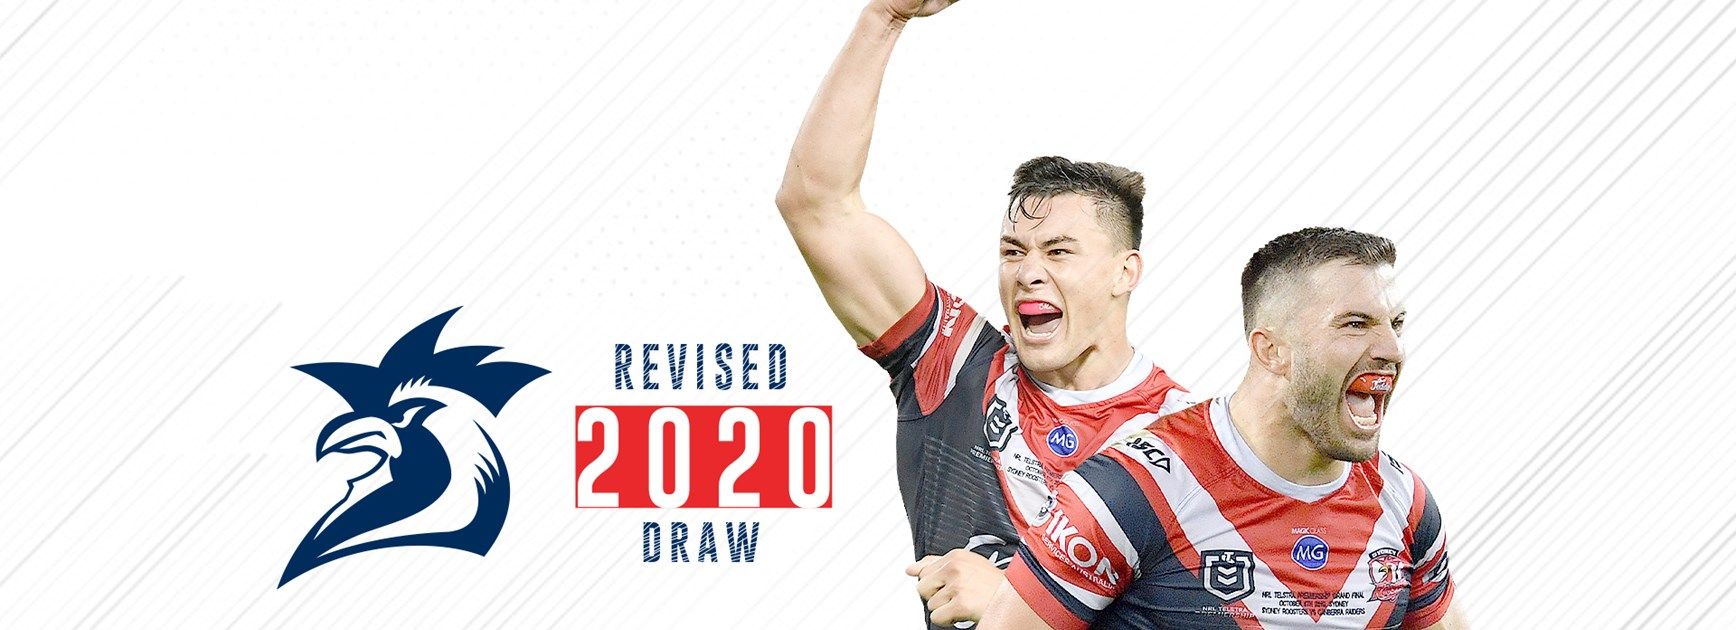 Download 2020 Draw Wallpaper